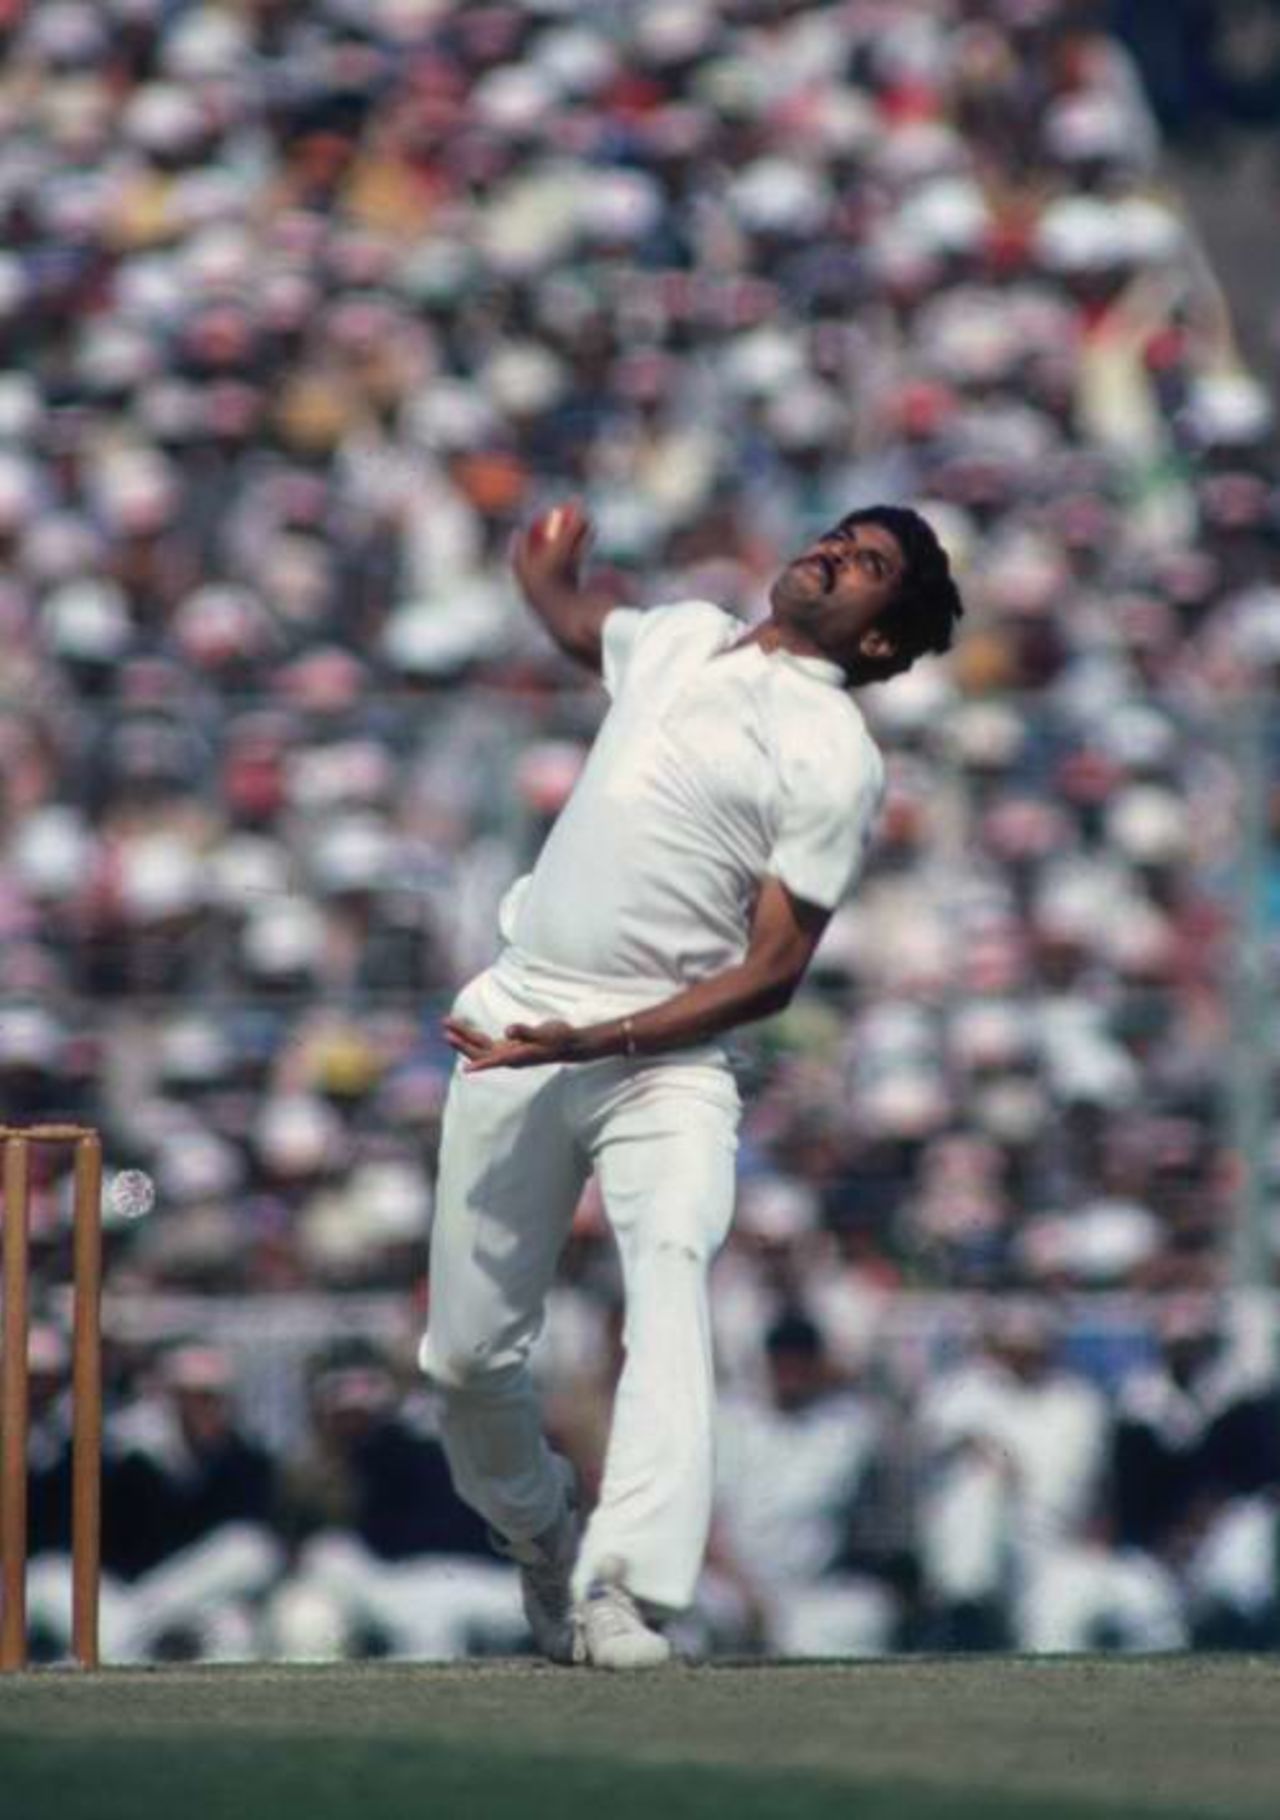 Kapil Dev bowls, fourth Test, India v England, Calcutta, 1982

